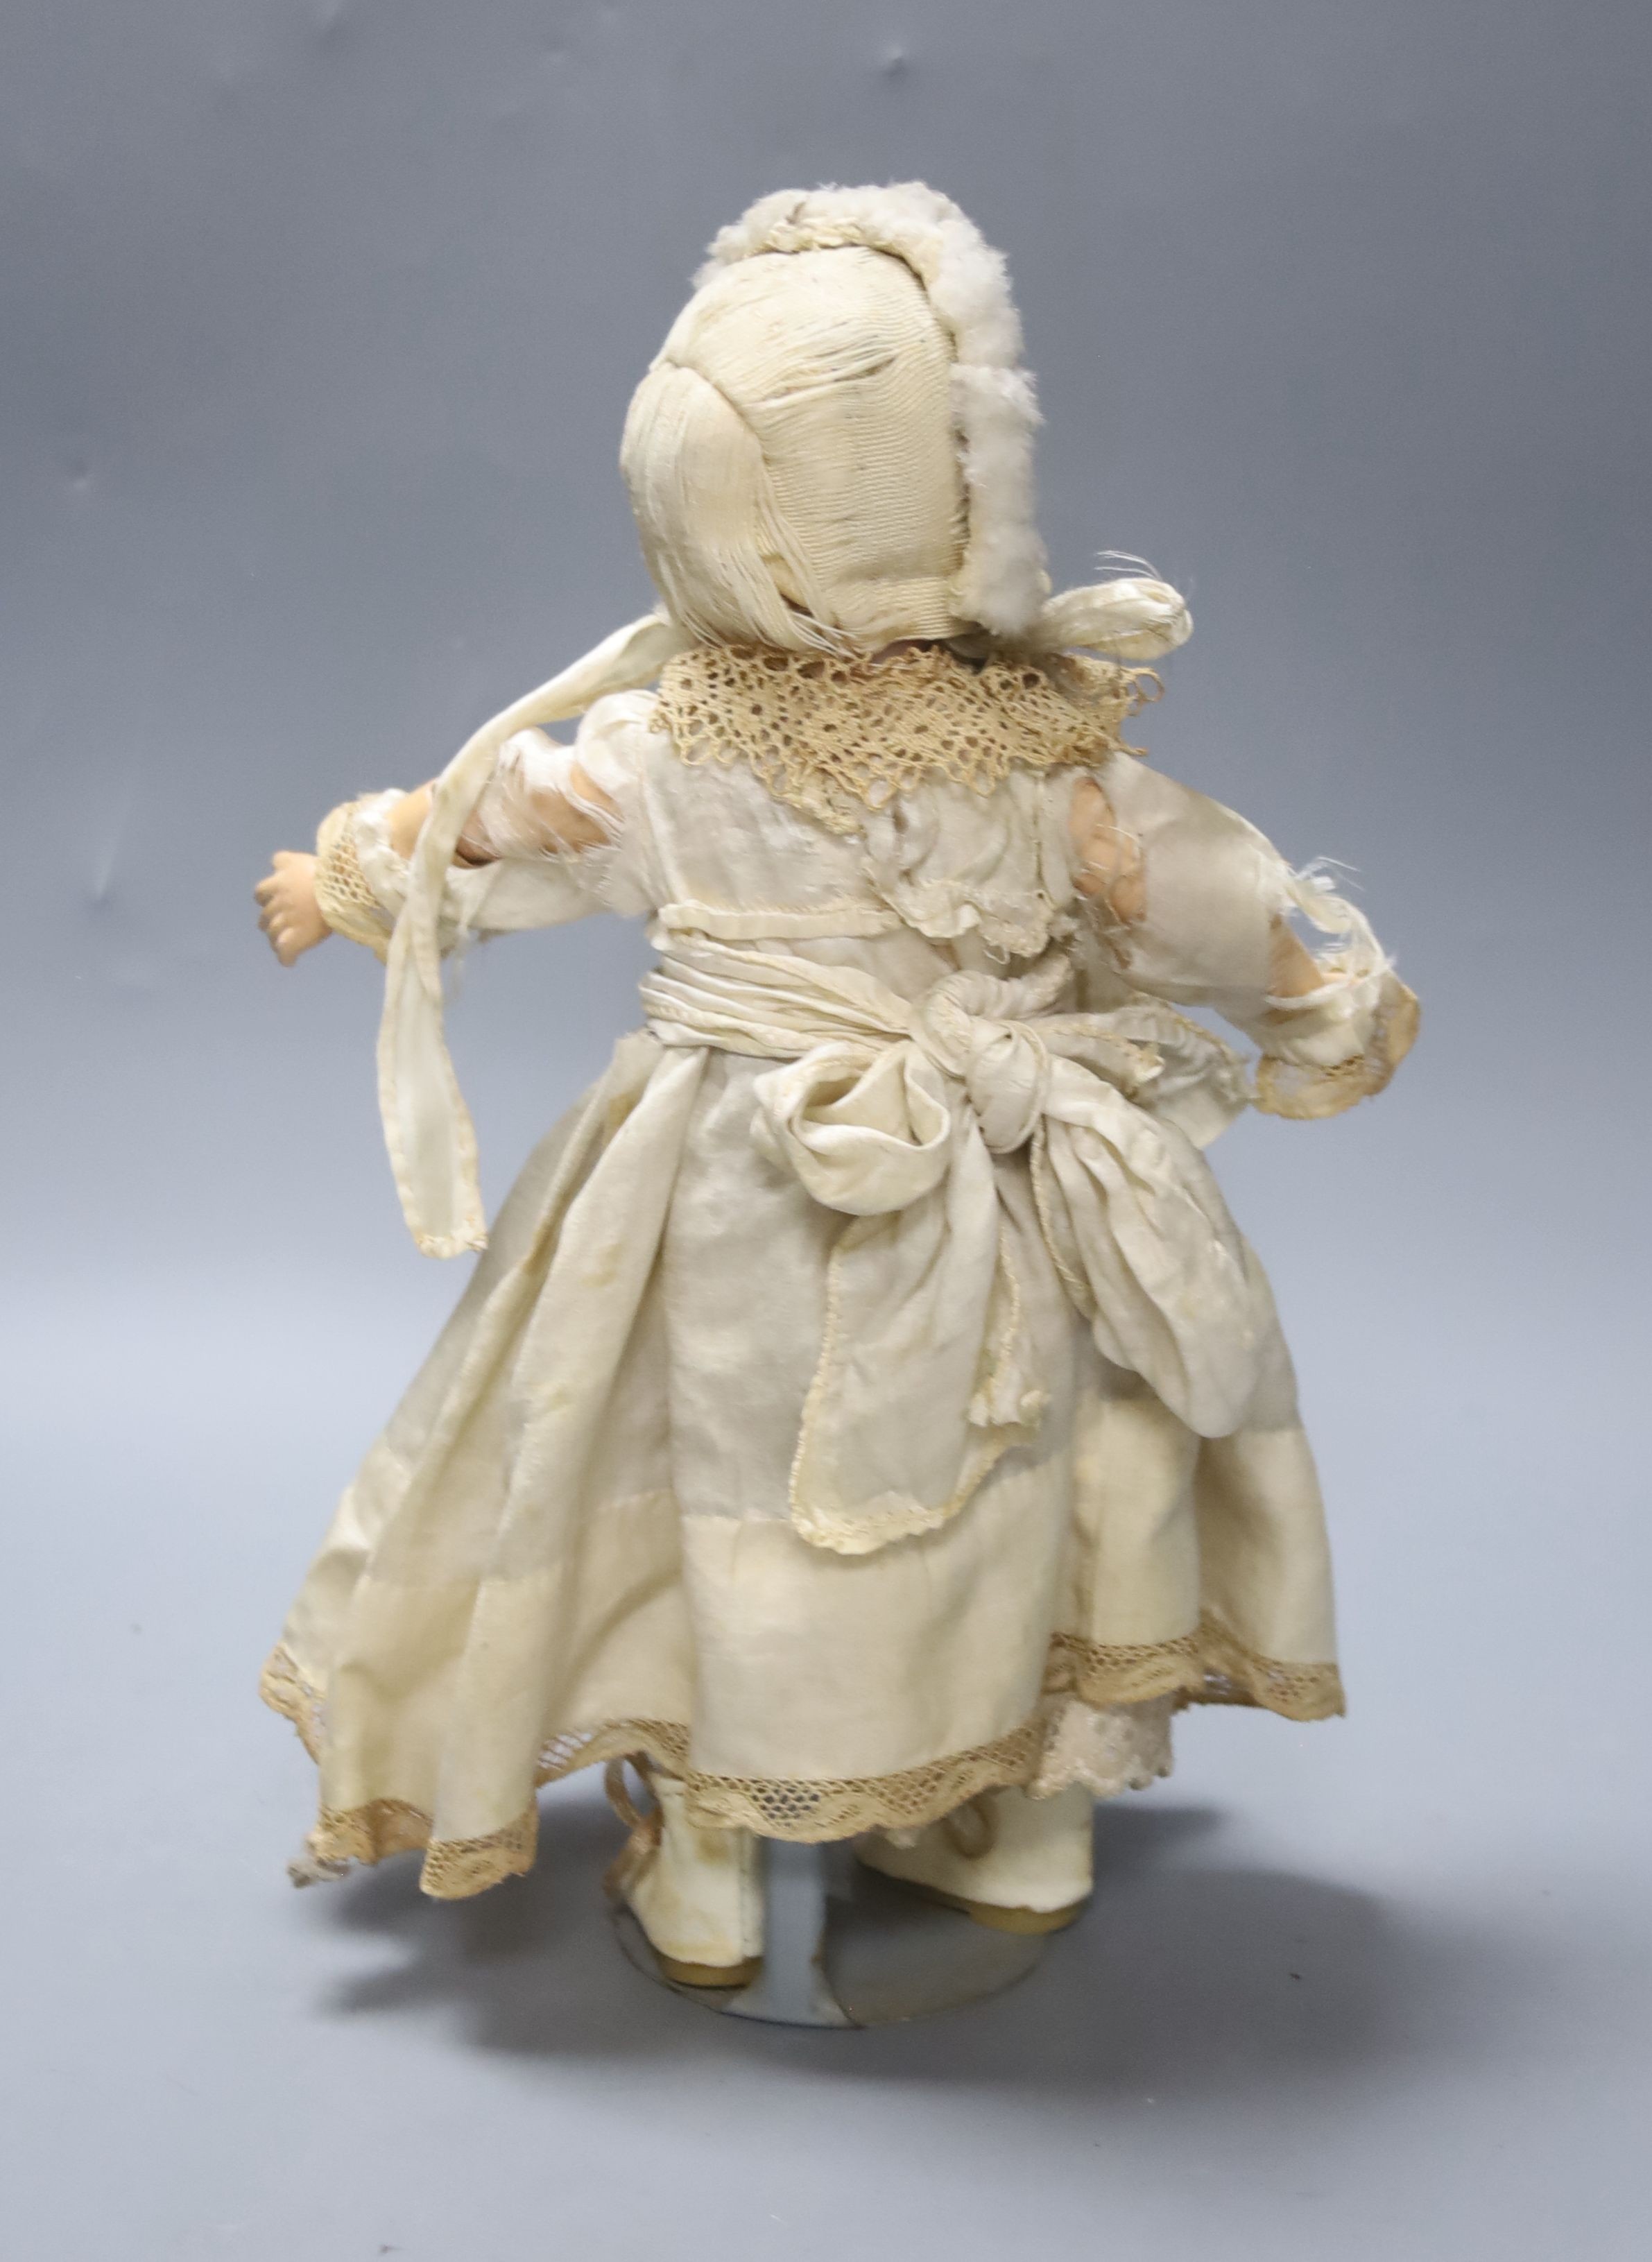 A Kammer & Reinhardt bisque doll, original clothes and shoes, 29cm